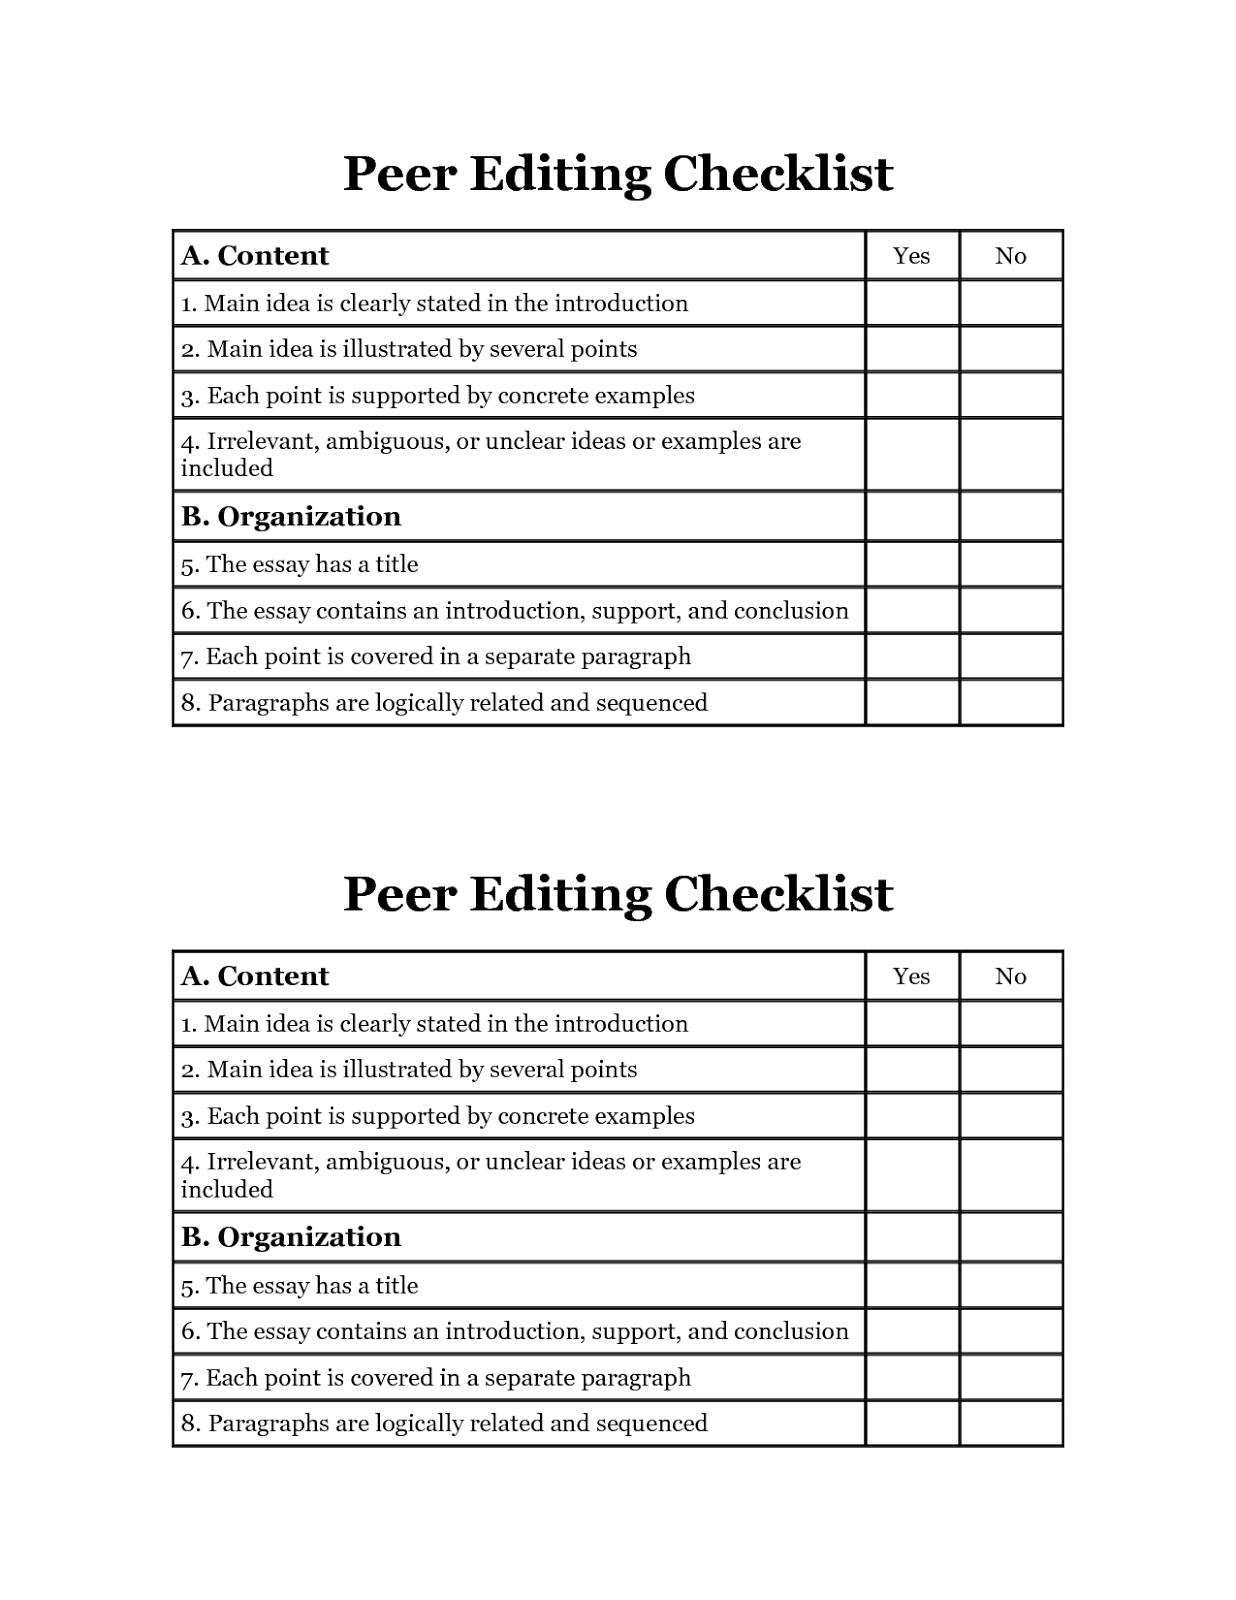 Evaluating a resume checklist